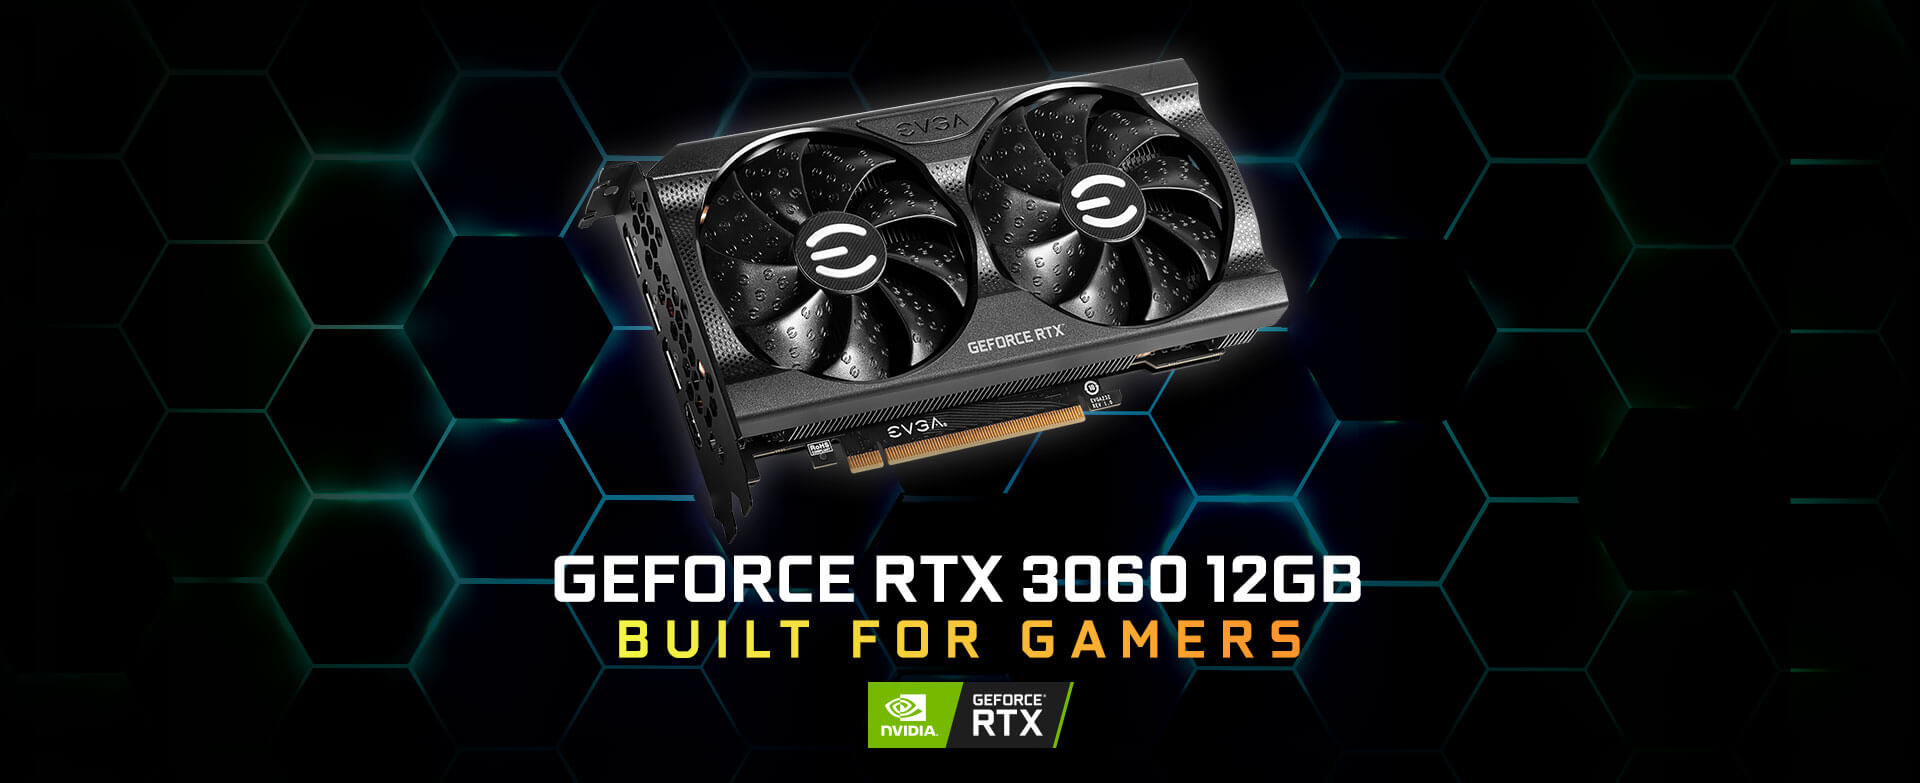 EVGA announces GeForce RTX 3060 12GB graphics cards 